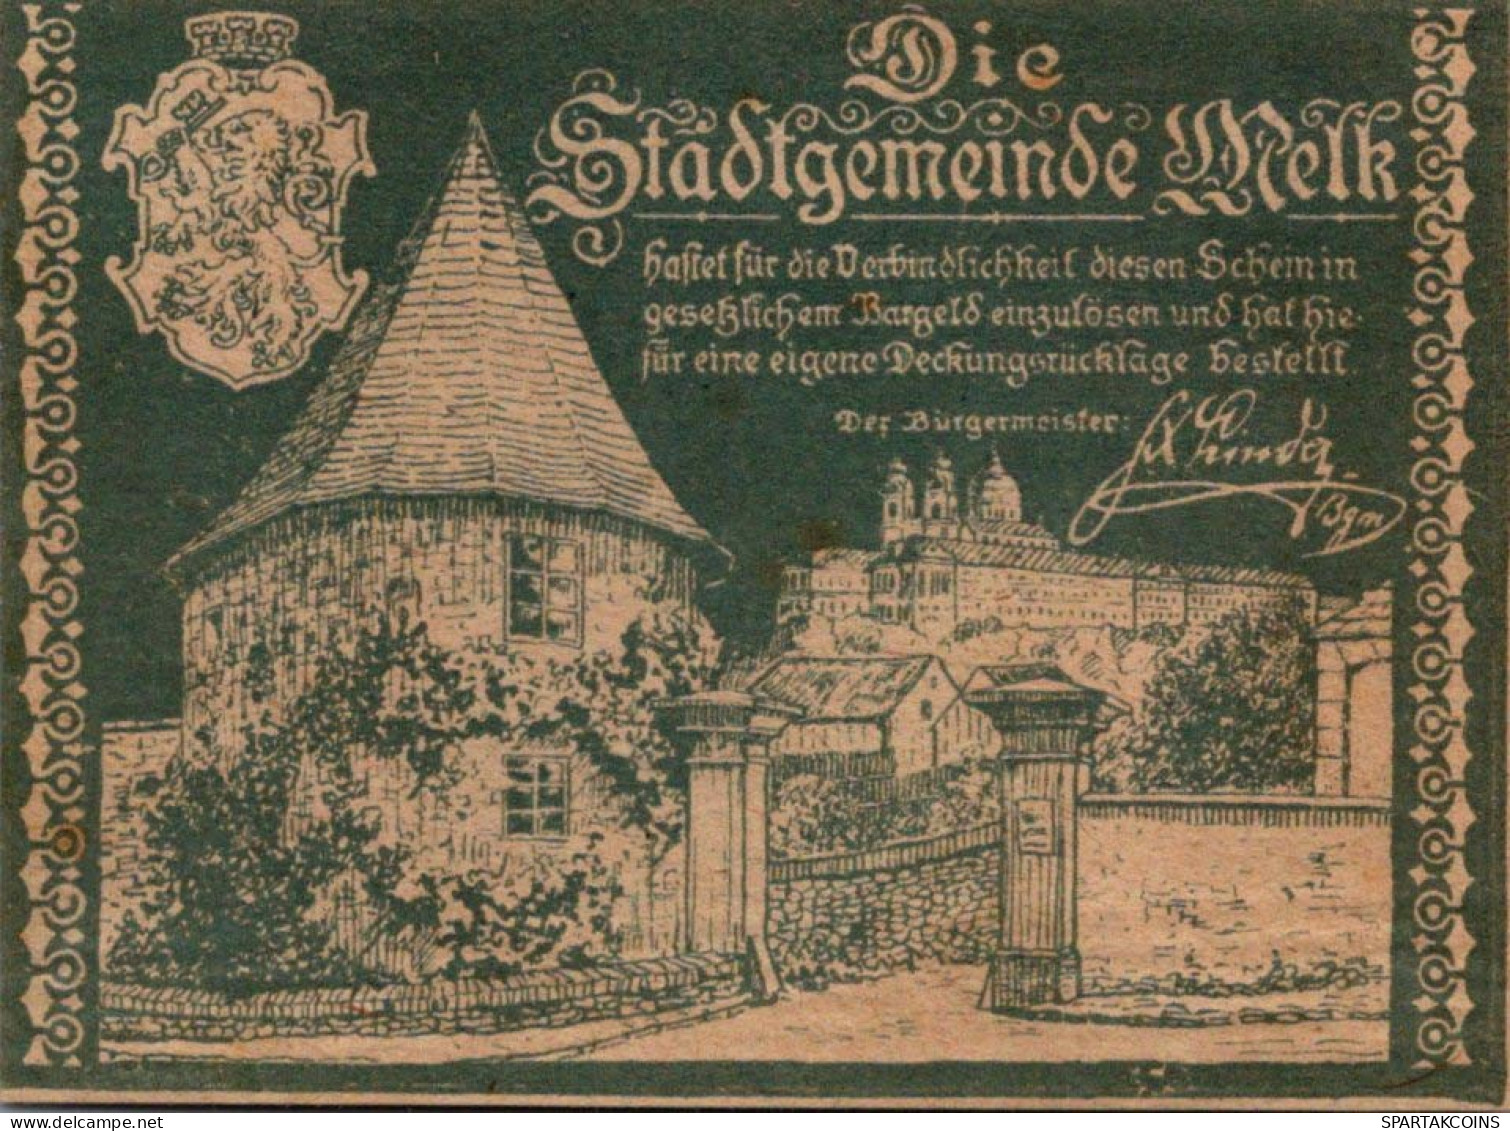 20 HELLER 1920 Stadt MELK Niedrigeren Österreich Notgeld Papiergeld Banknote #PG628 - [11] Local Banknote Issues